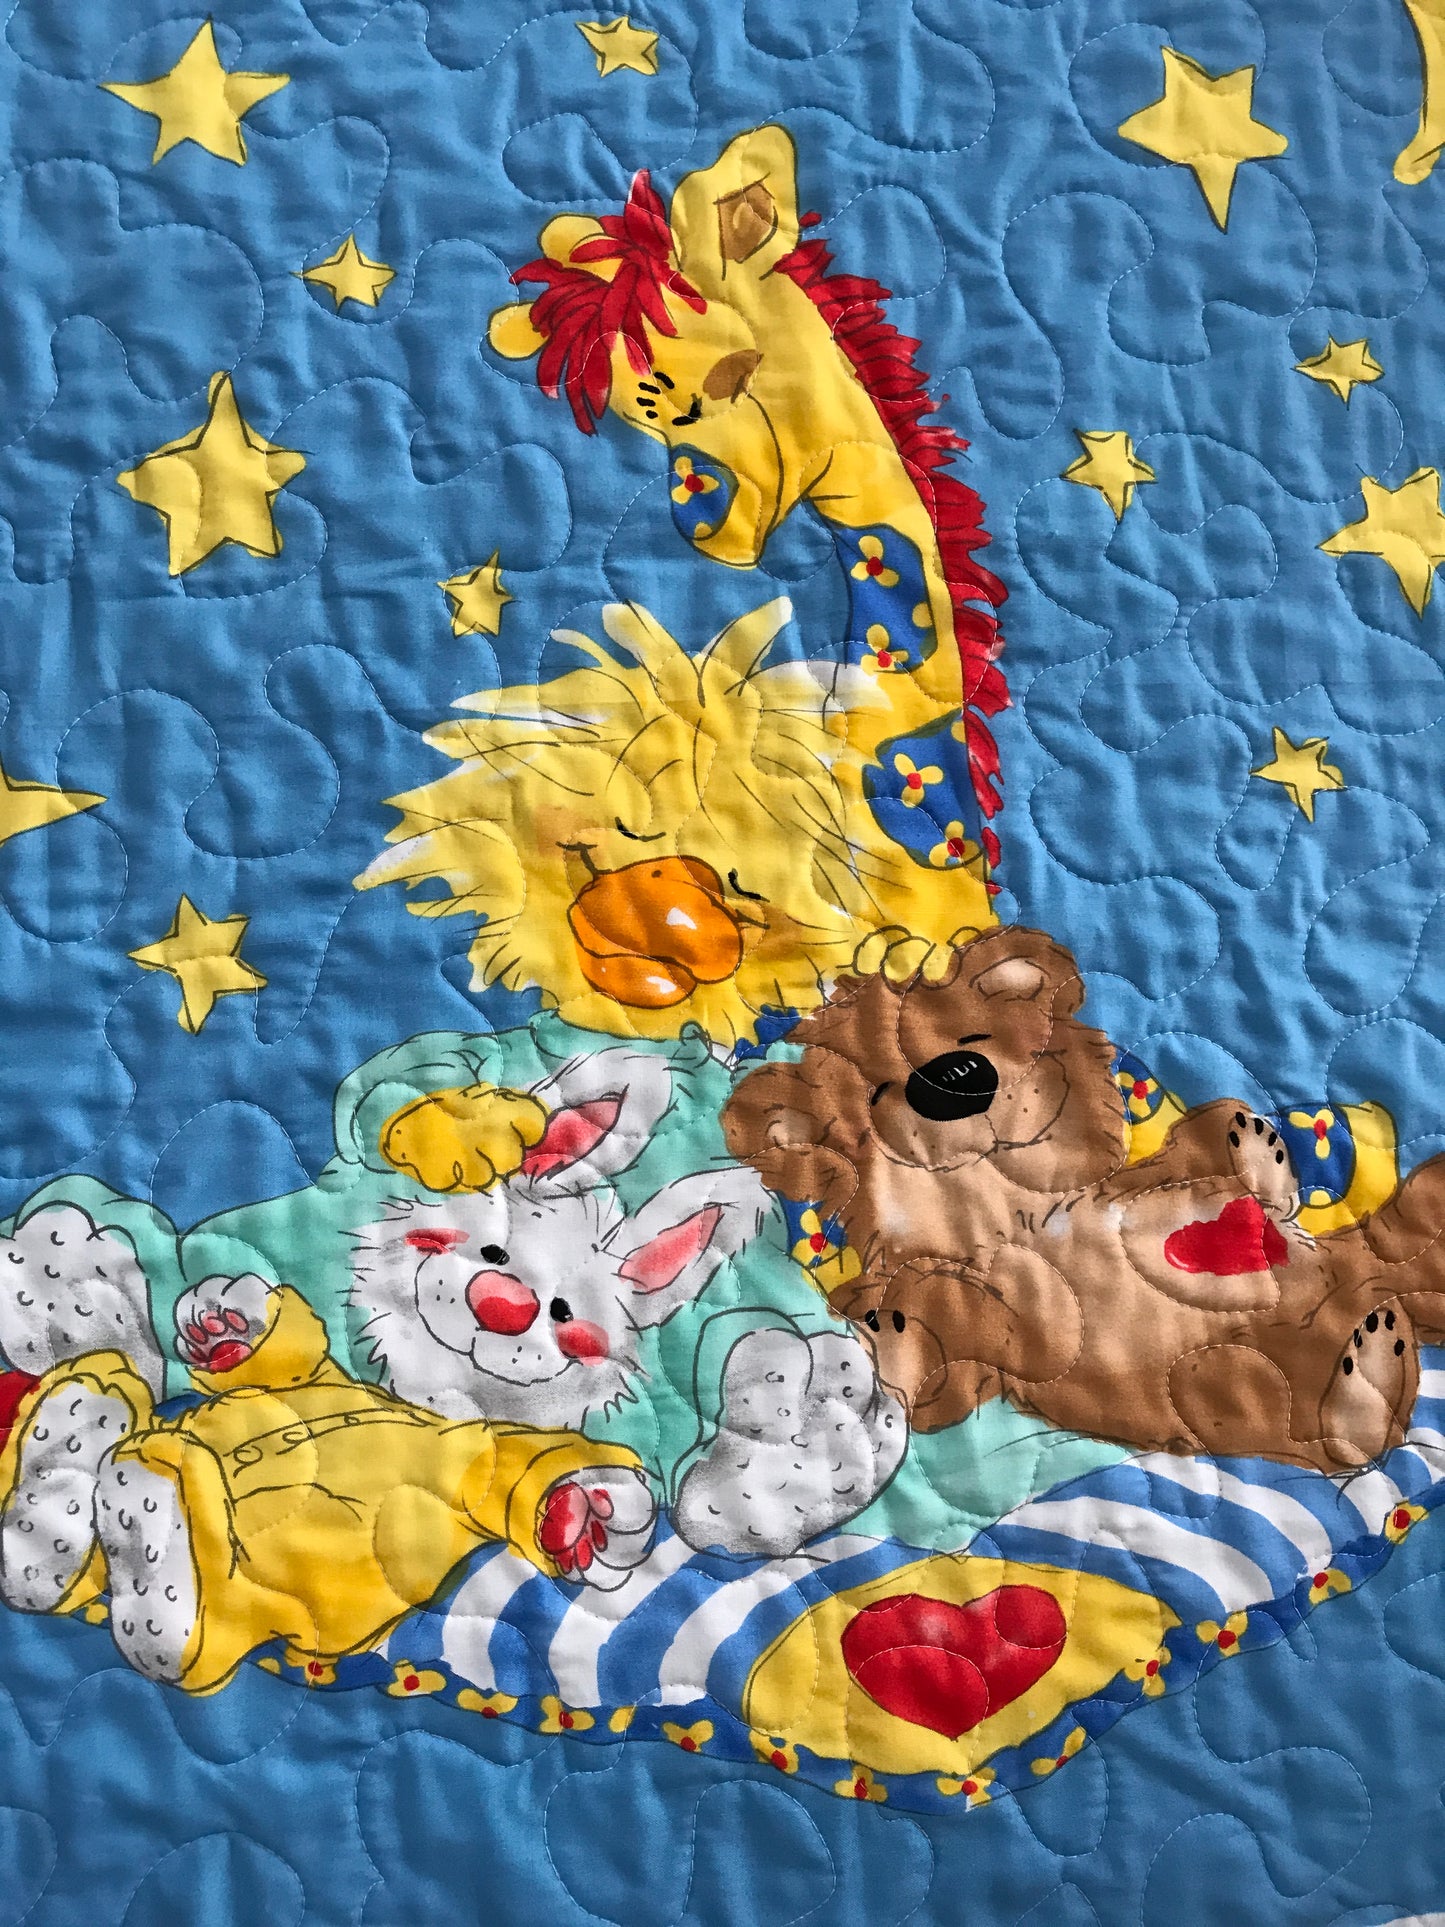 Sleepy Nap Time Baby Child Quilted Blanket Giraffe, Duck, Bunny & Bear Baby Nursery Gender Neutral Bedding